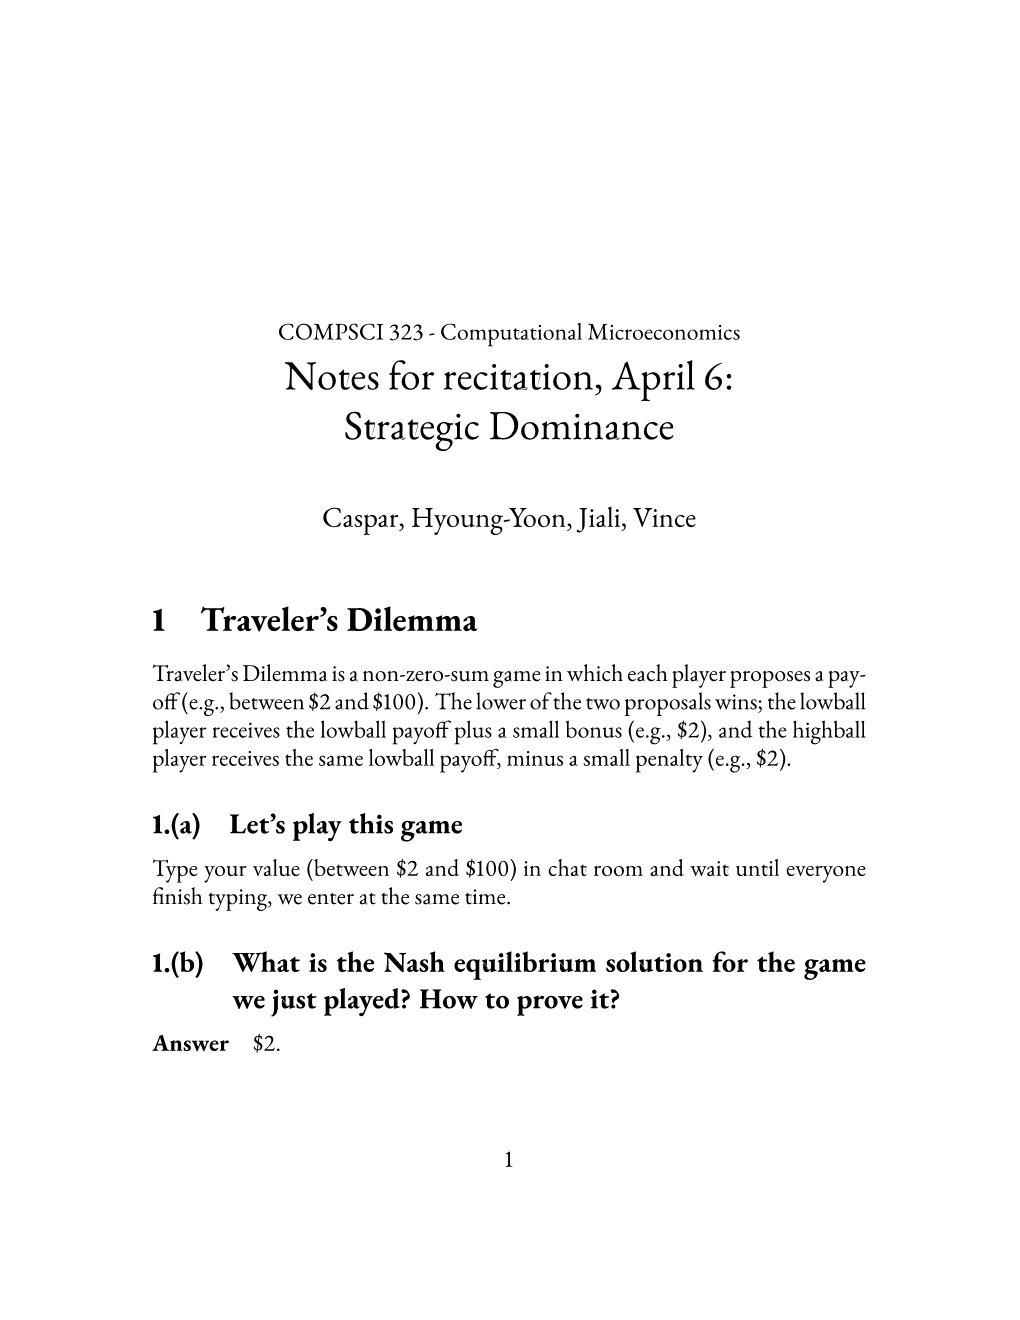 Notes for Recitation, April : Strategic Dominance